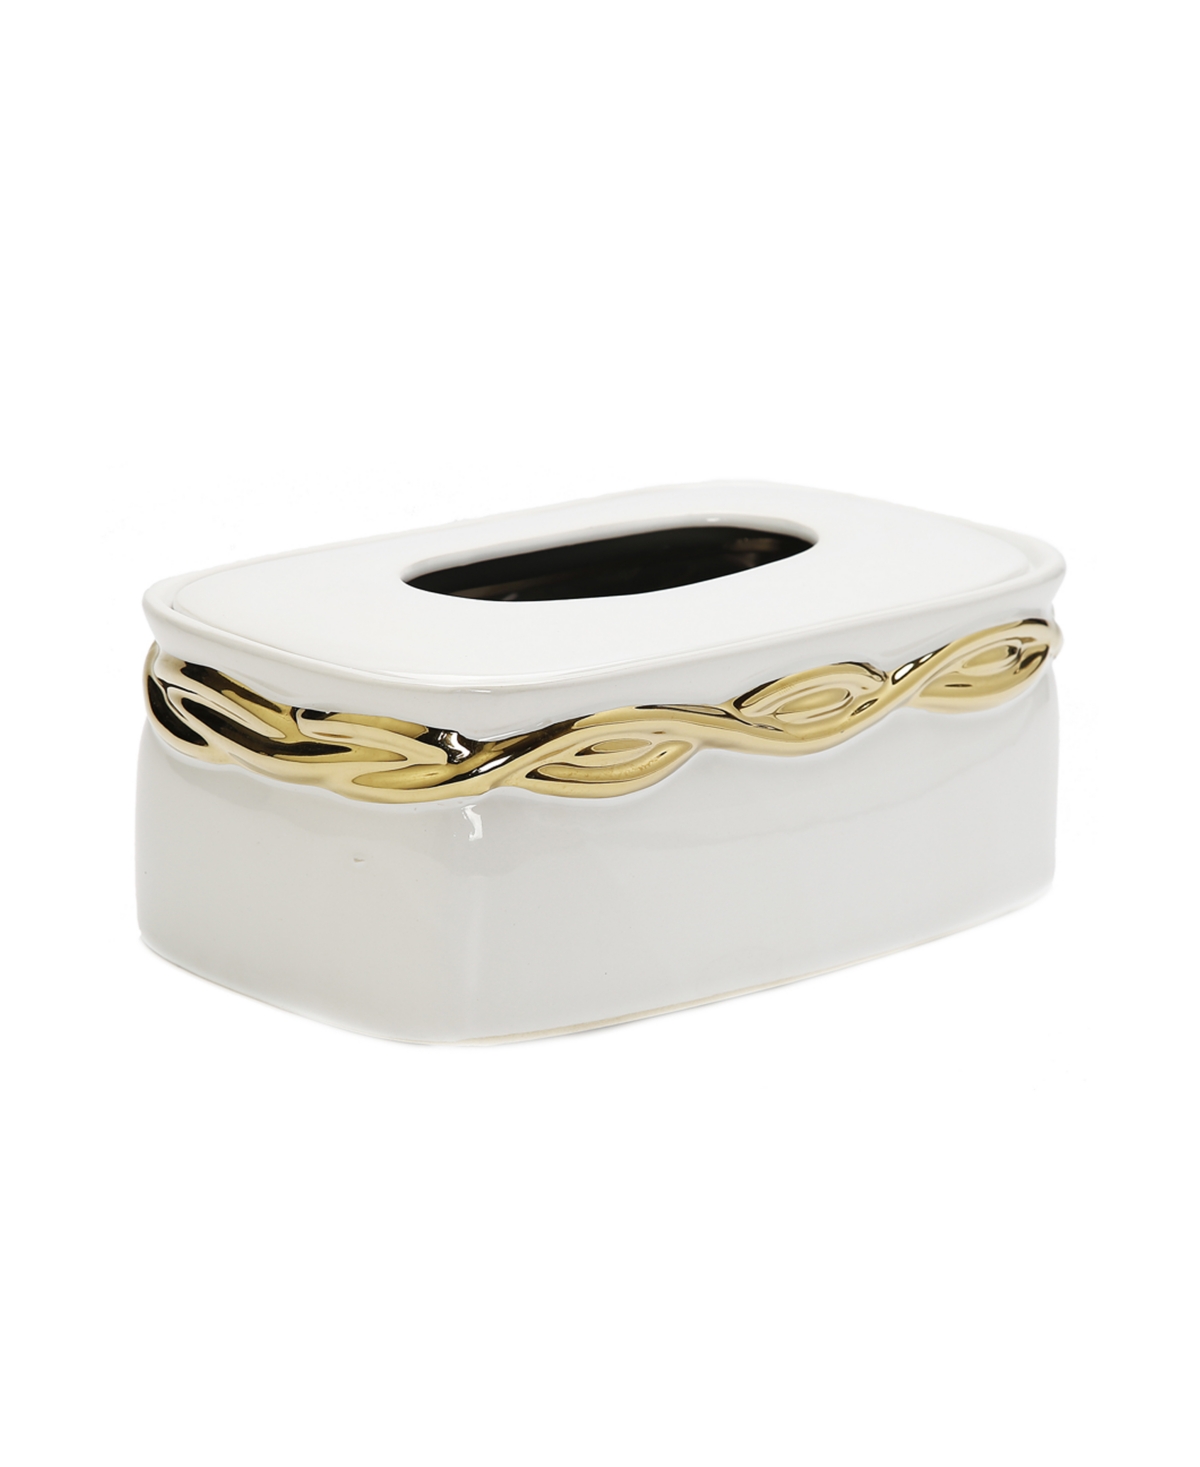 White Tissue Box Gold-Tone Rounded Design - White, Gold